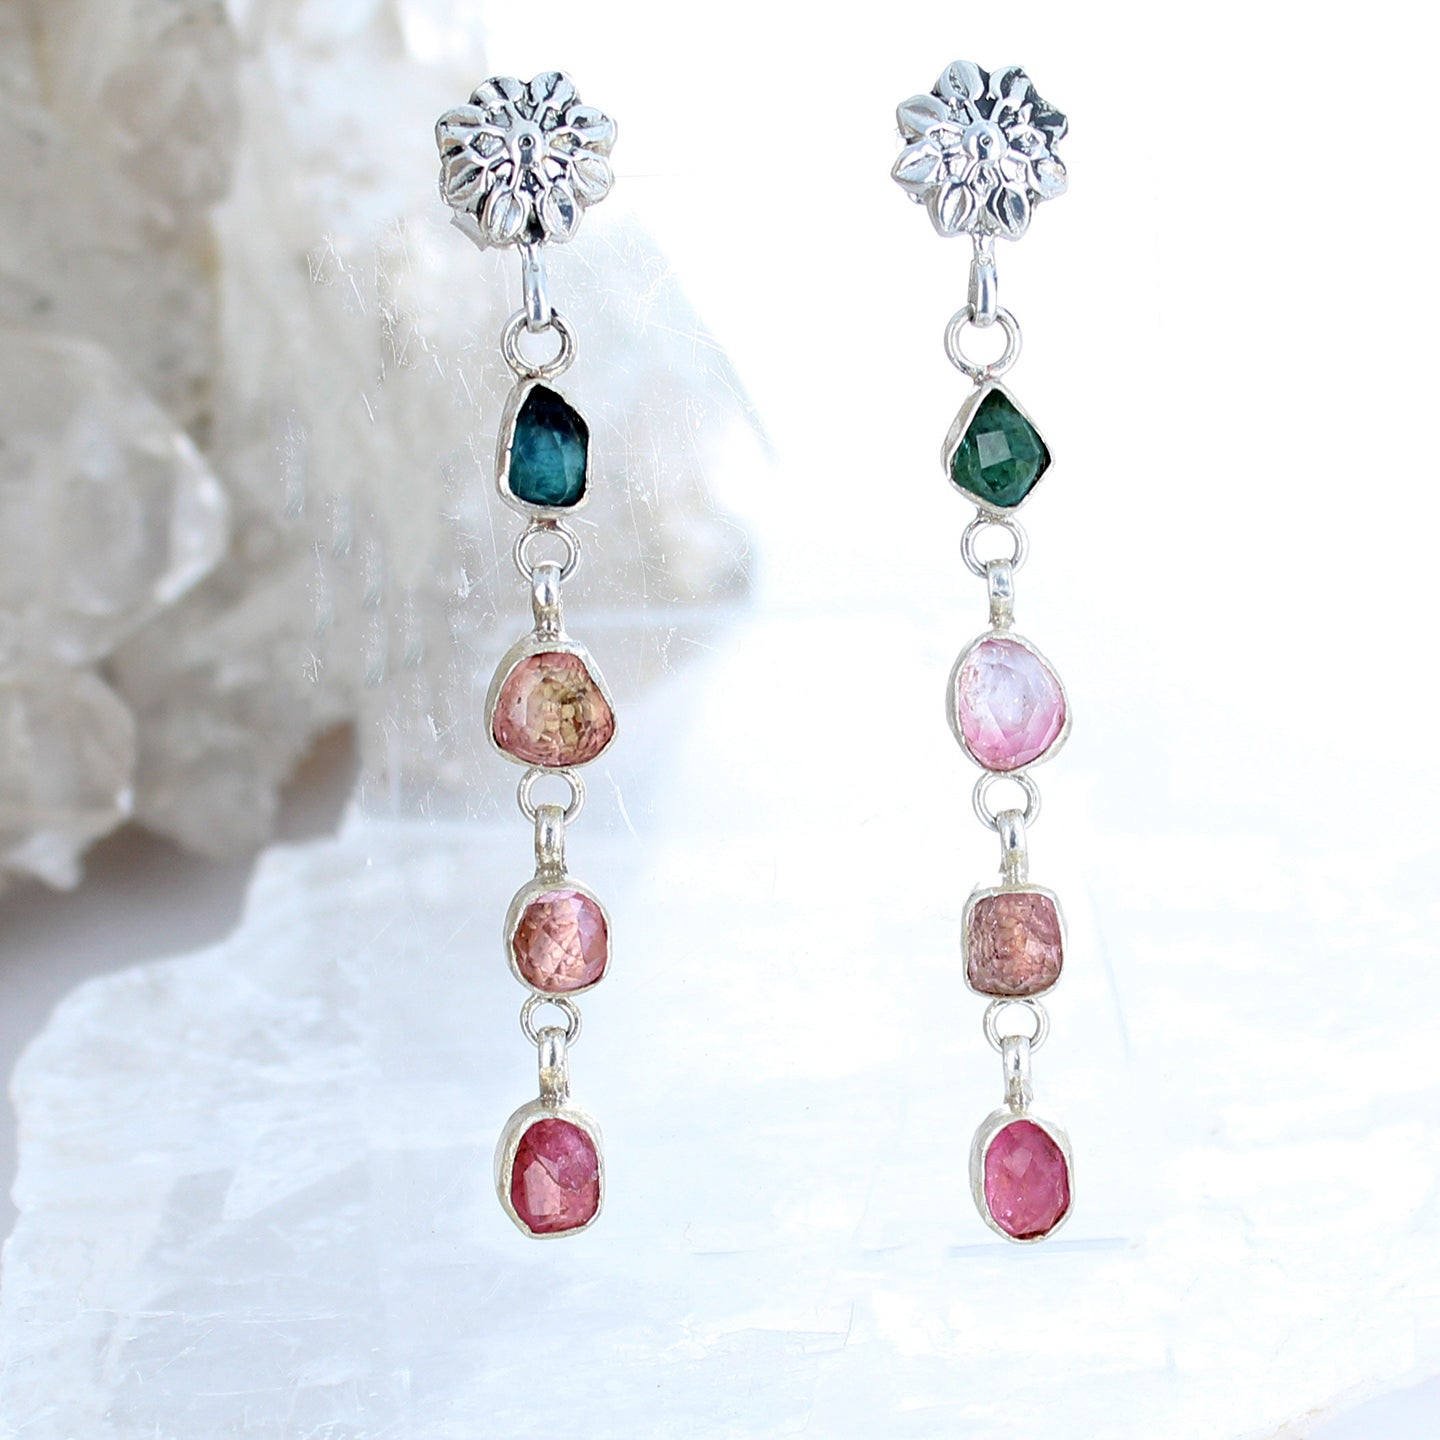 Blue and Pink Tourmaline Sterling Earrings 4 Stone Beauties #2 -NewWorldGems